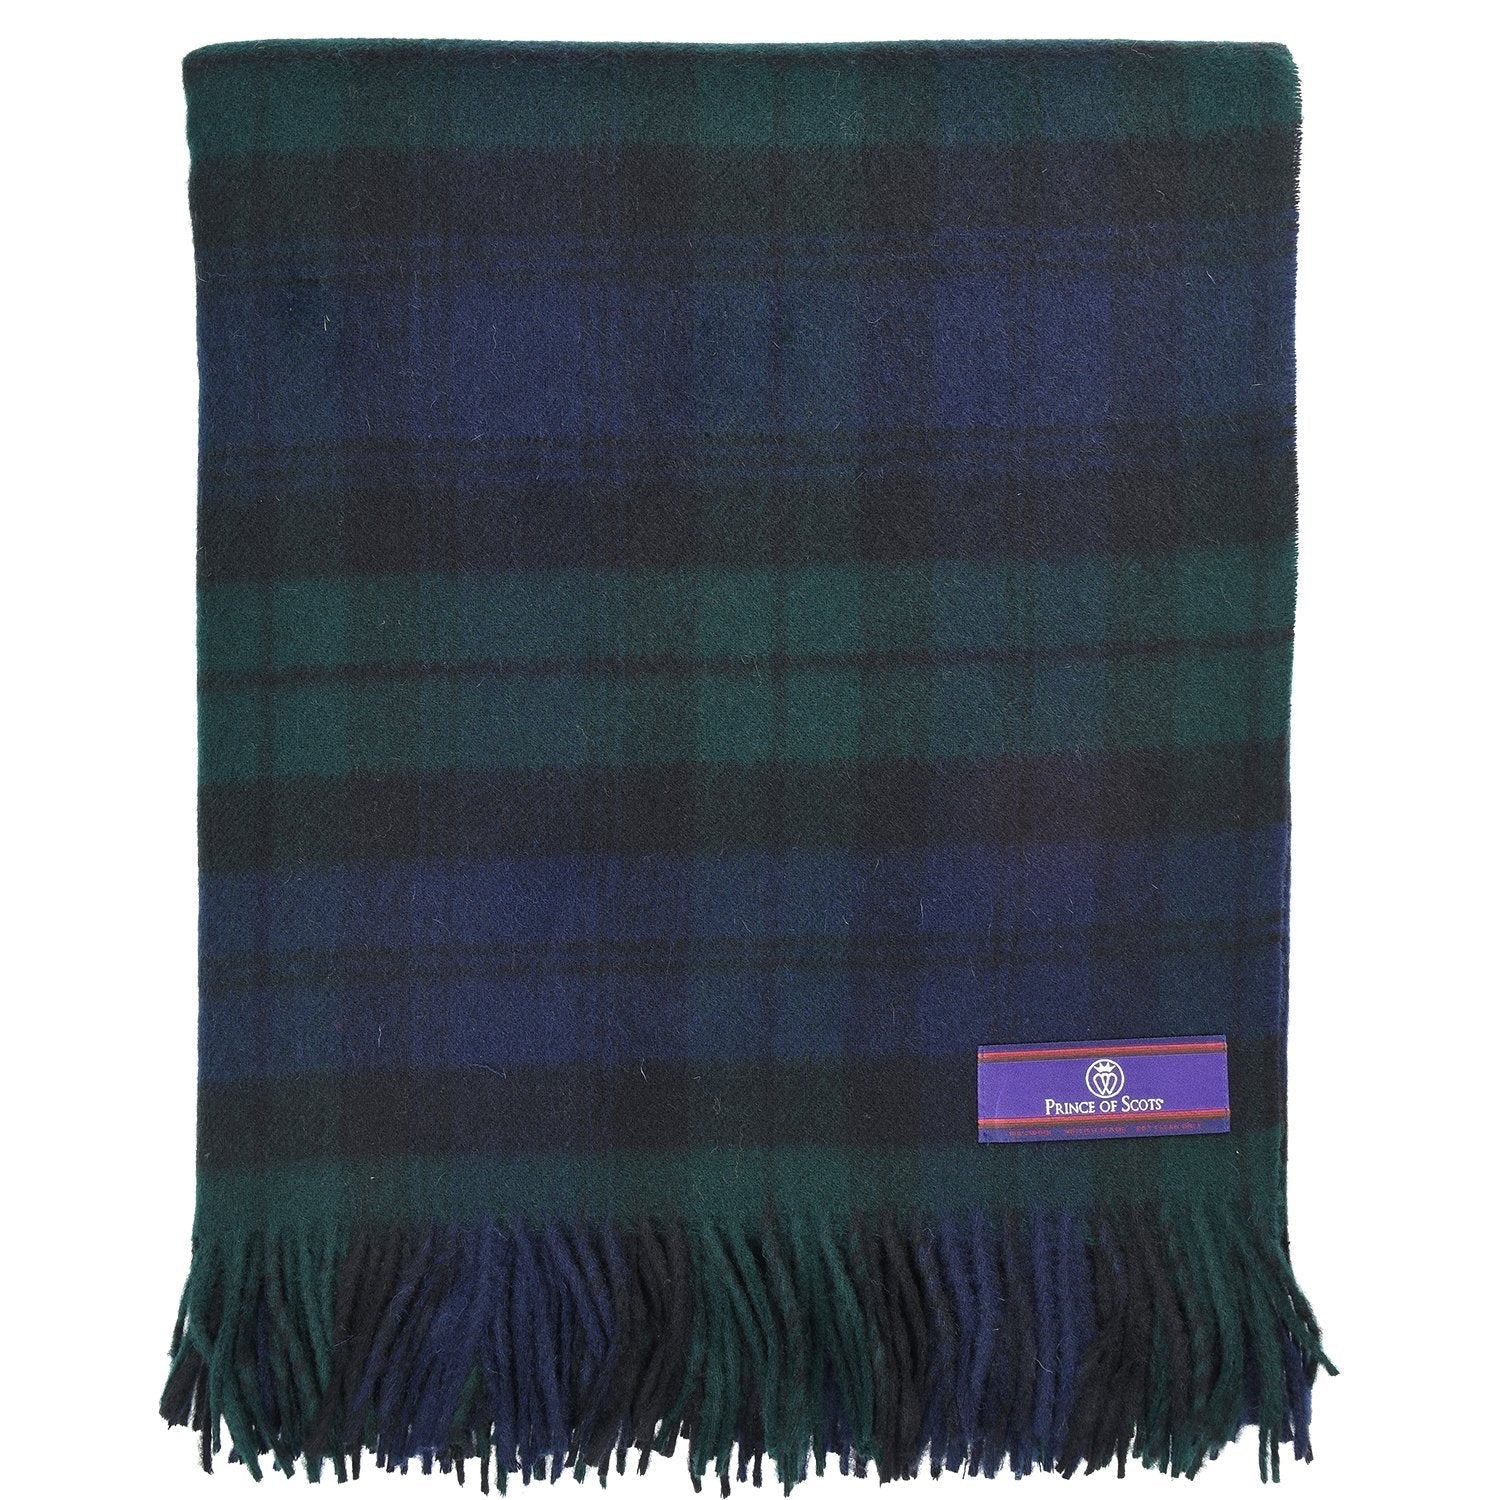 Prince of Scots Highland Tartan Tweed Merino Wool Throw ~ Black Watch ~-Throws and Blankets-Prince of Scots-Prince of Scots